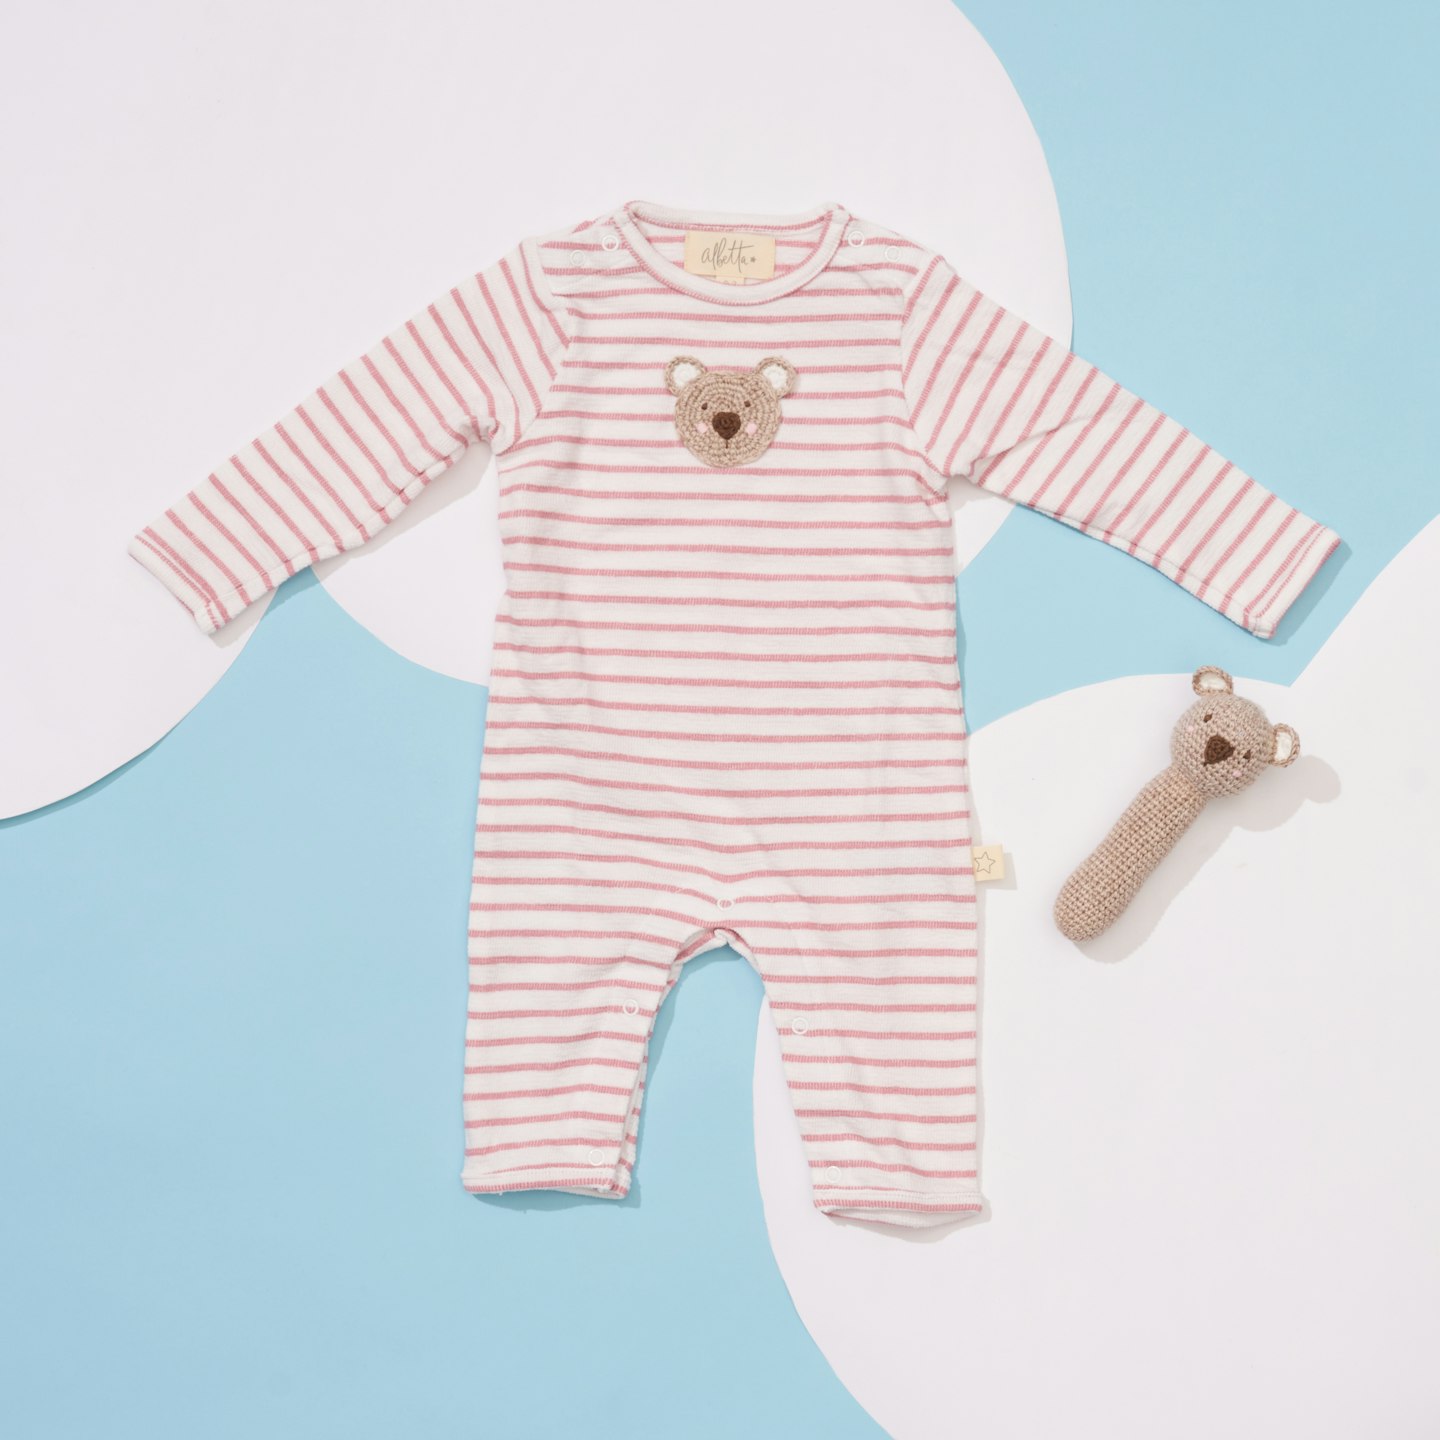 mum to be gifts  New Mum And Baby Gift Guide John Lewis & Partners, Albetta Bear Babygro and Crochet Rattle Gift Set, £36